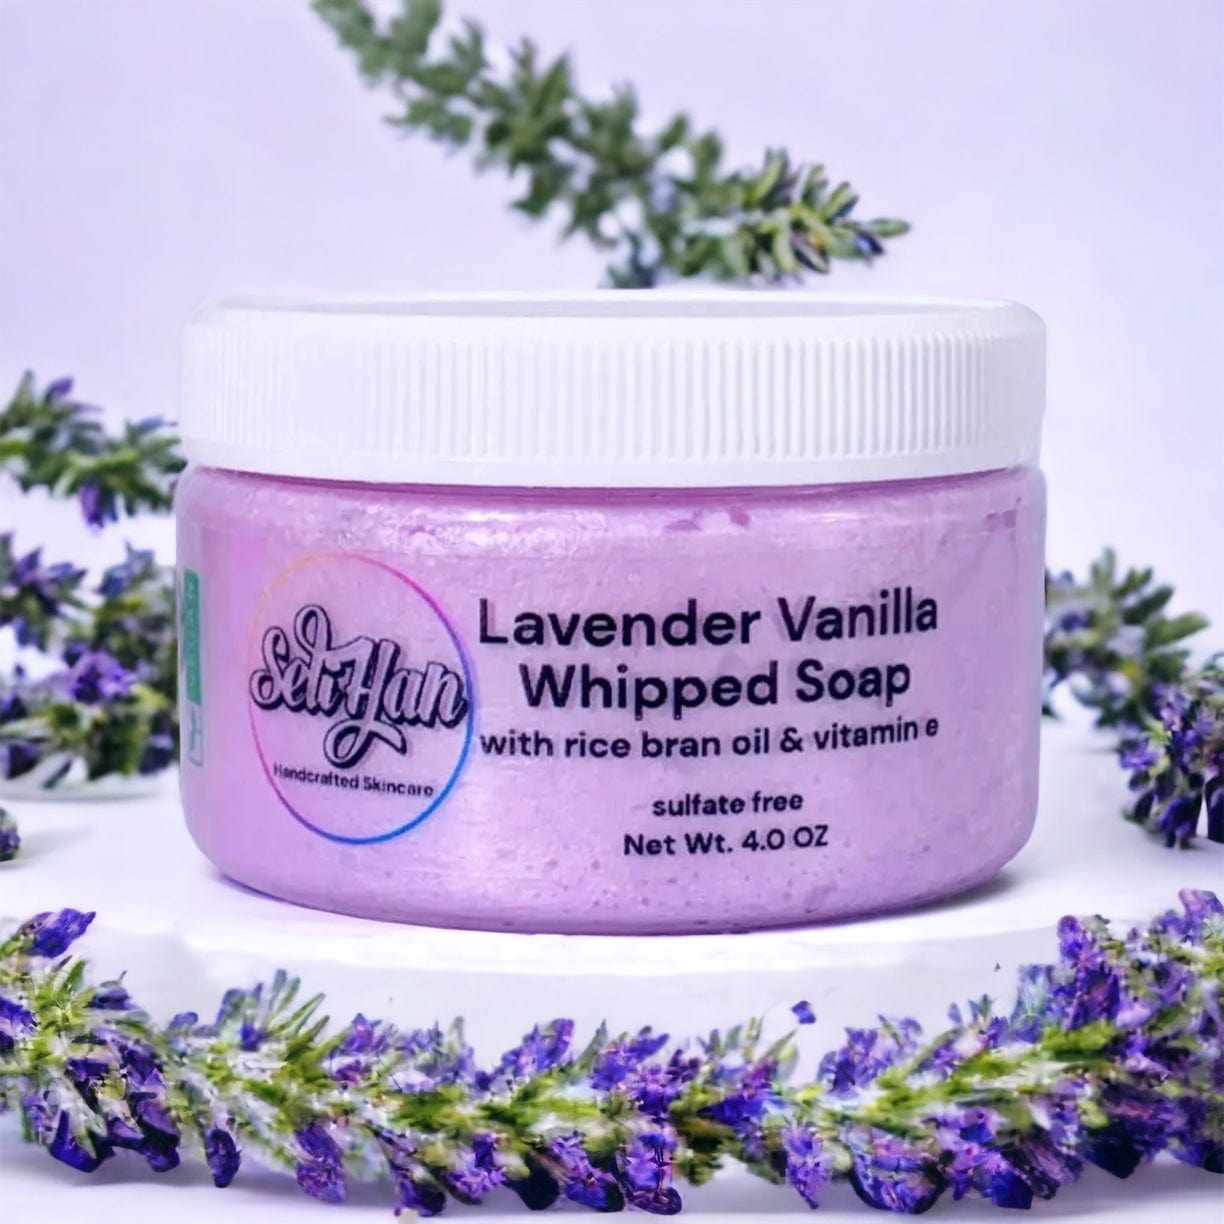 Lavender Vanilla Whipped Soap - Seli Han Skincare 